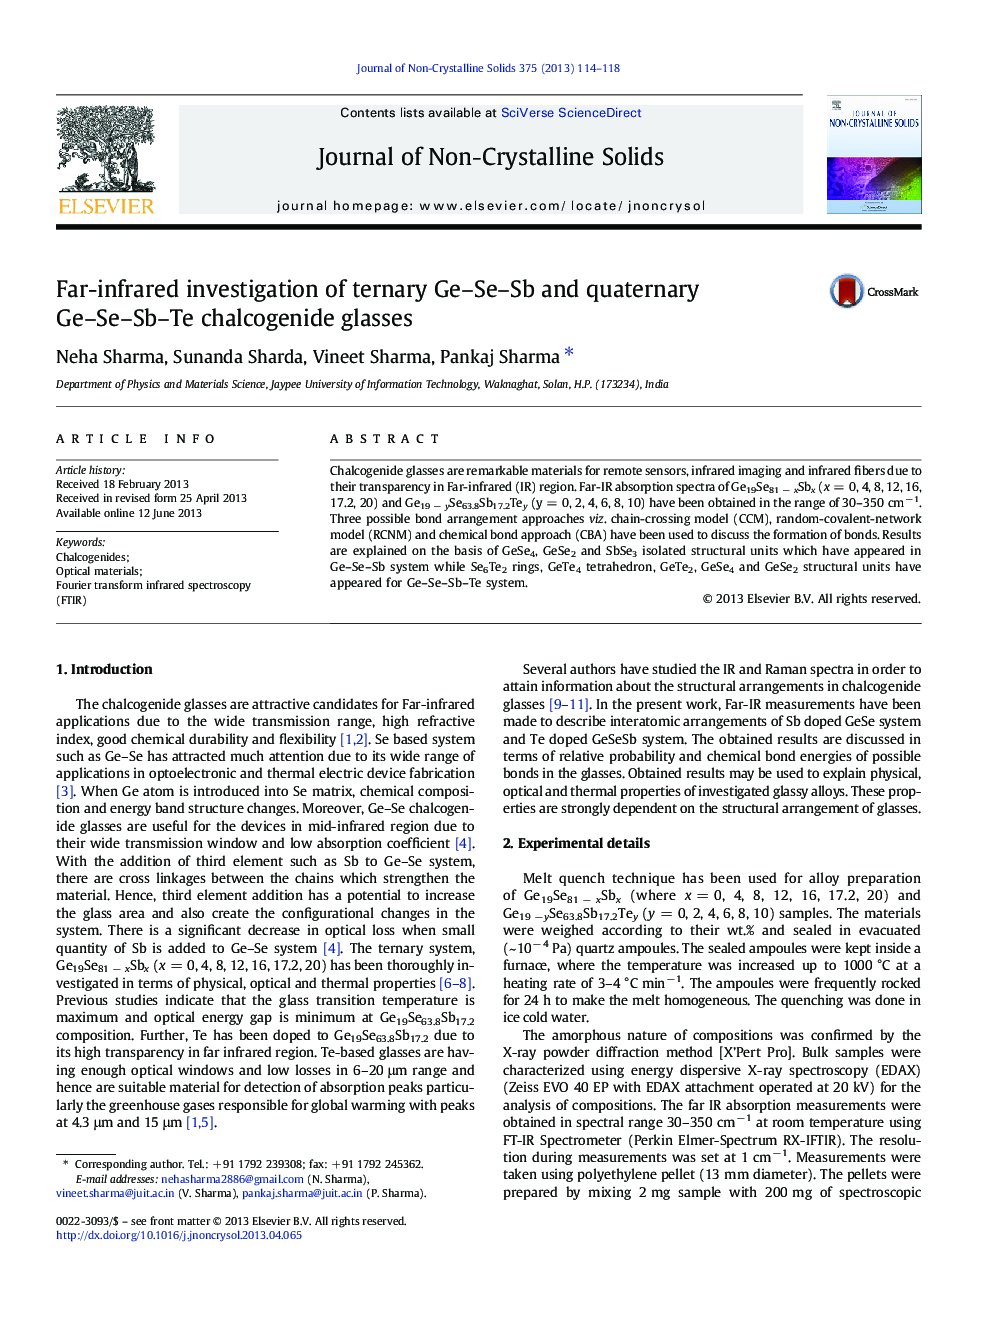 Far-infrared investigation of ternary Ge–Se–Sb and quaternary Ge–Se–Sb–Te chalcogenide glasses